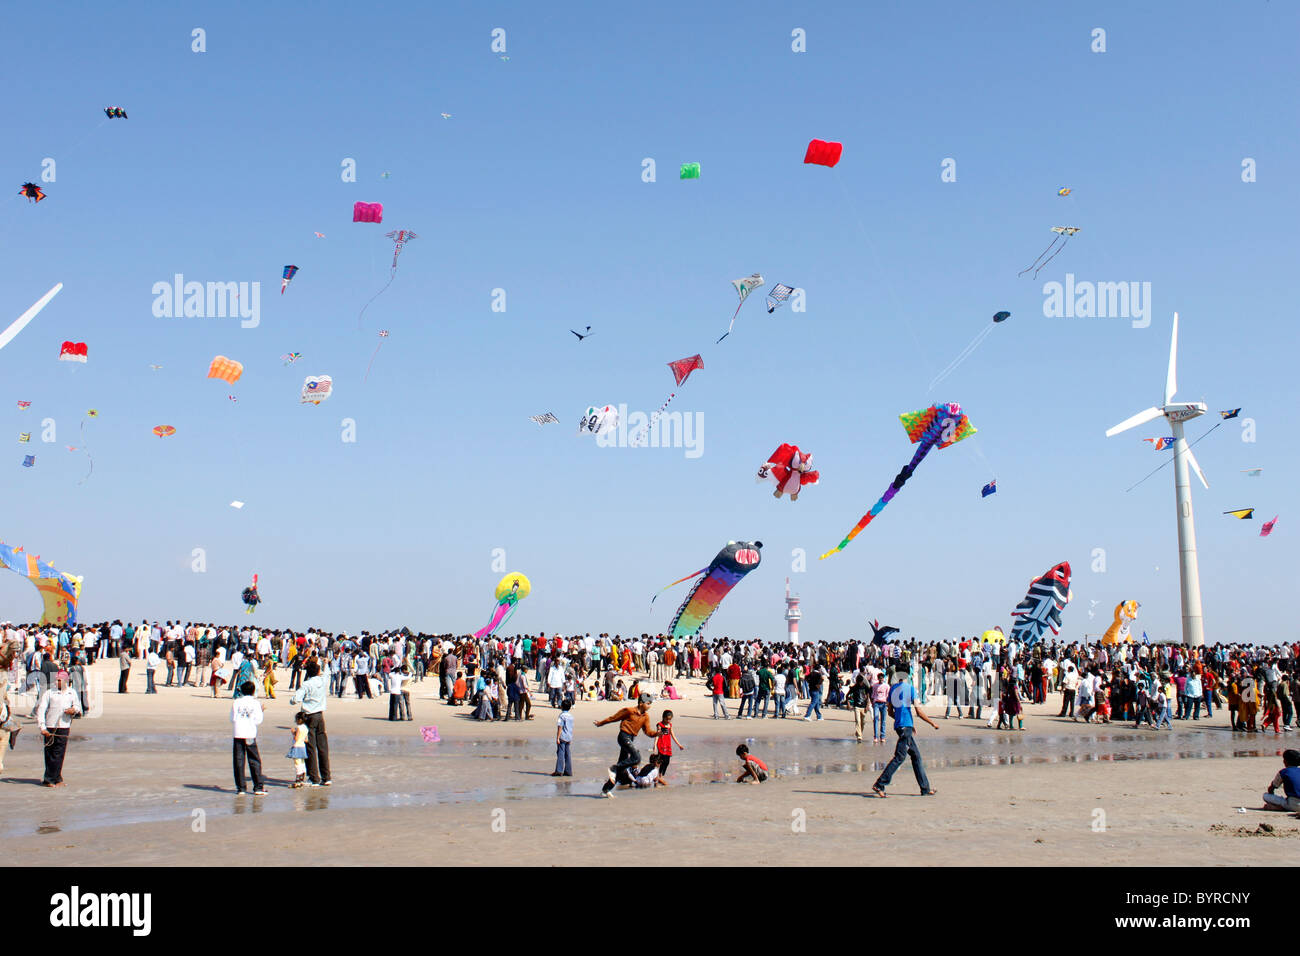 A view of Kite festival at Mandavi beach, Gujarat,India Stock Photo